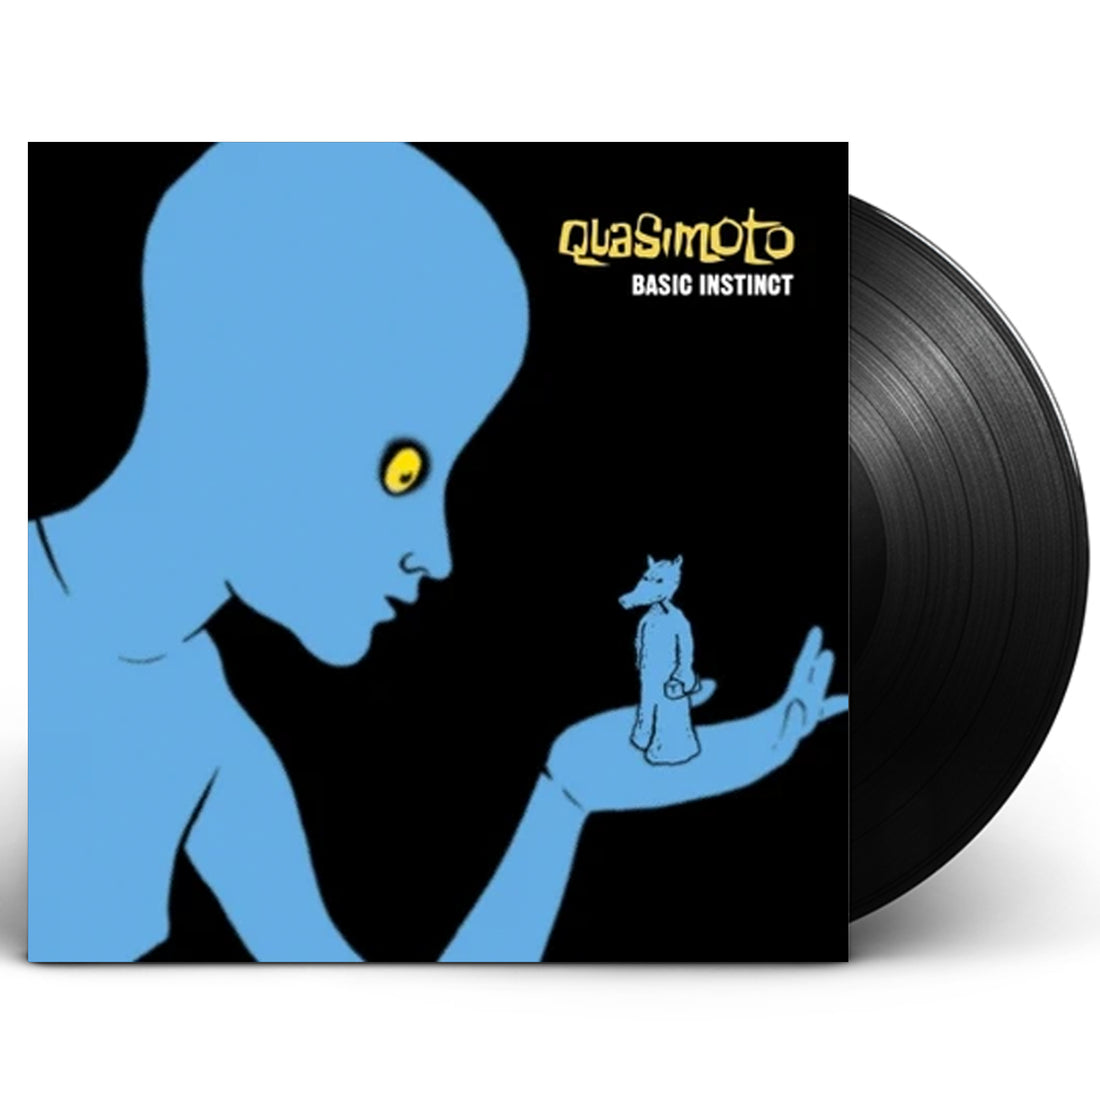 Quasimoto "Basic Instinct" 12" Vinyl